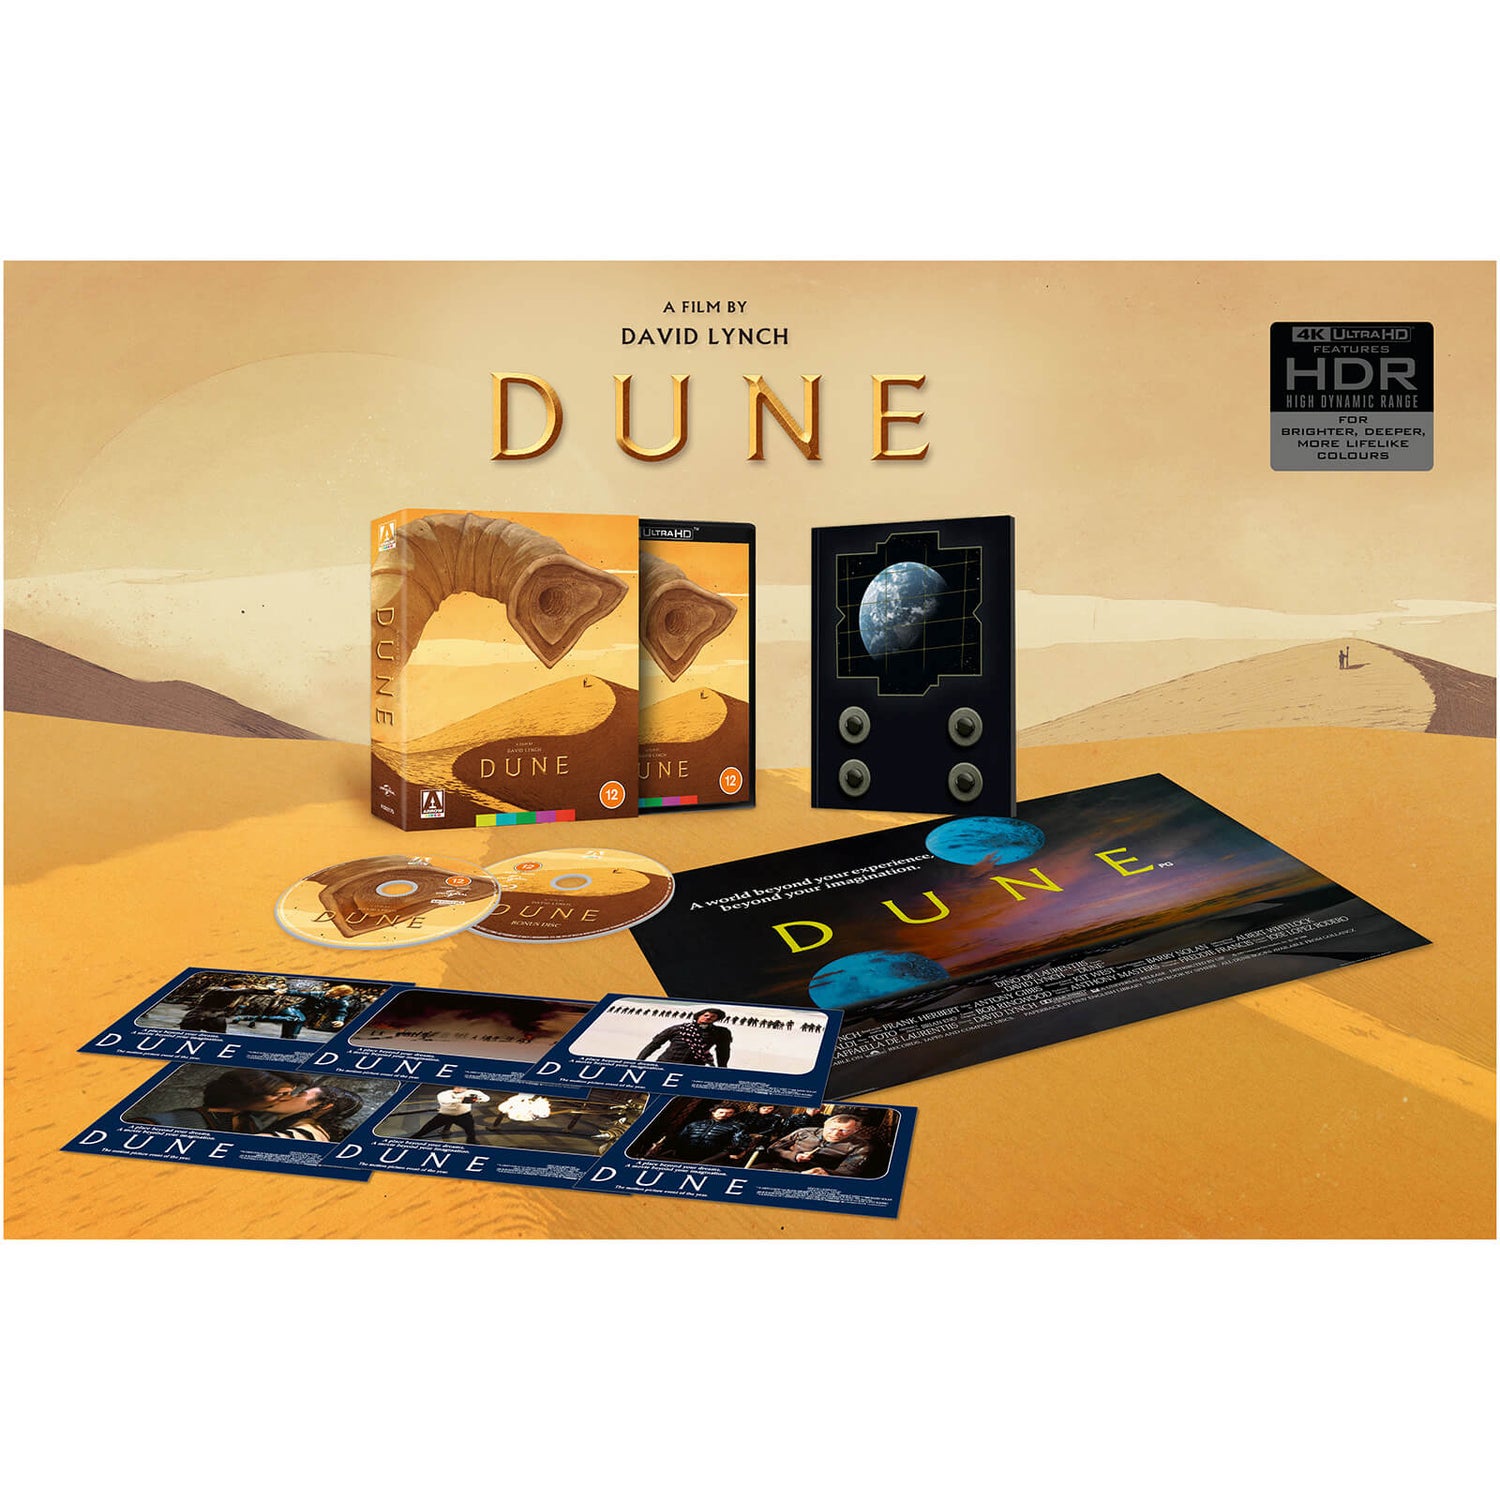 Dune Limited Edition 4K UHD